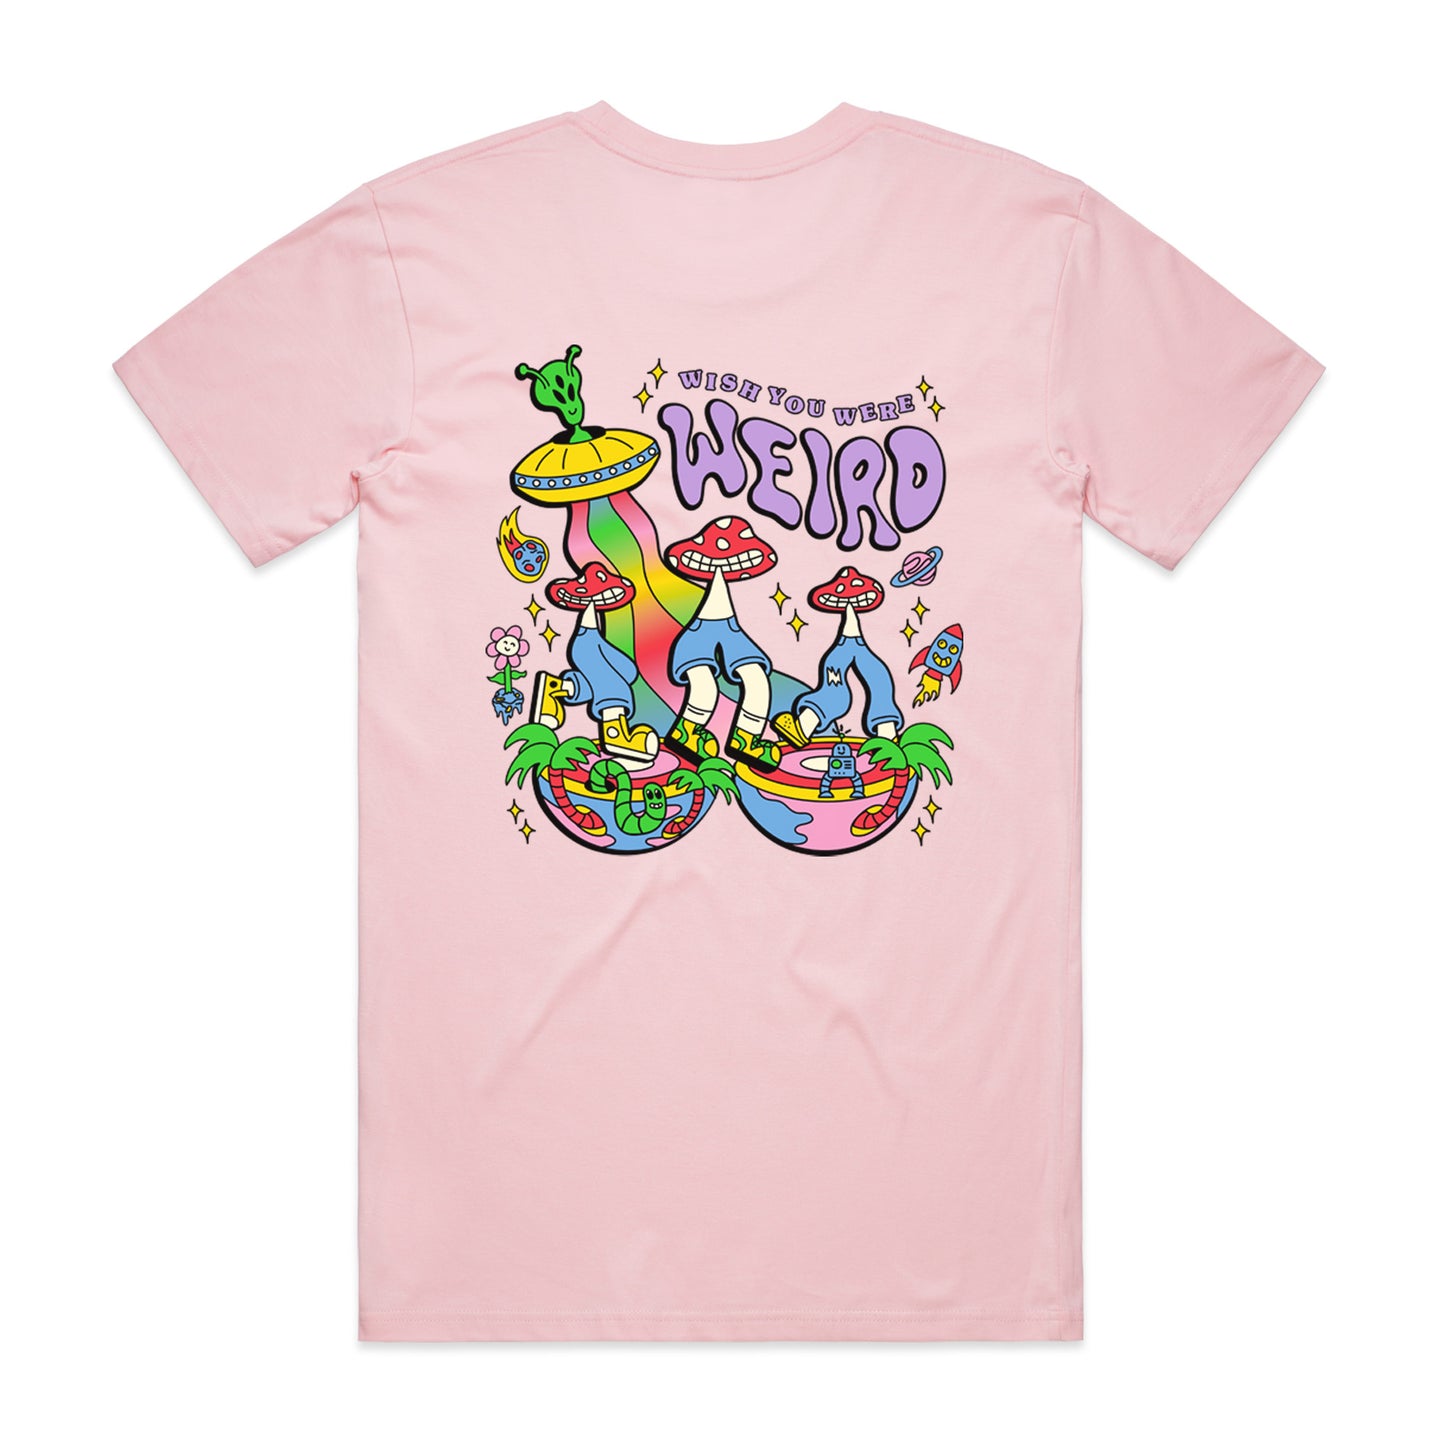 Wish You Were Weird T-Shirt